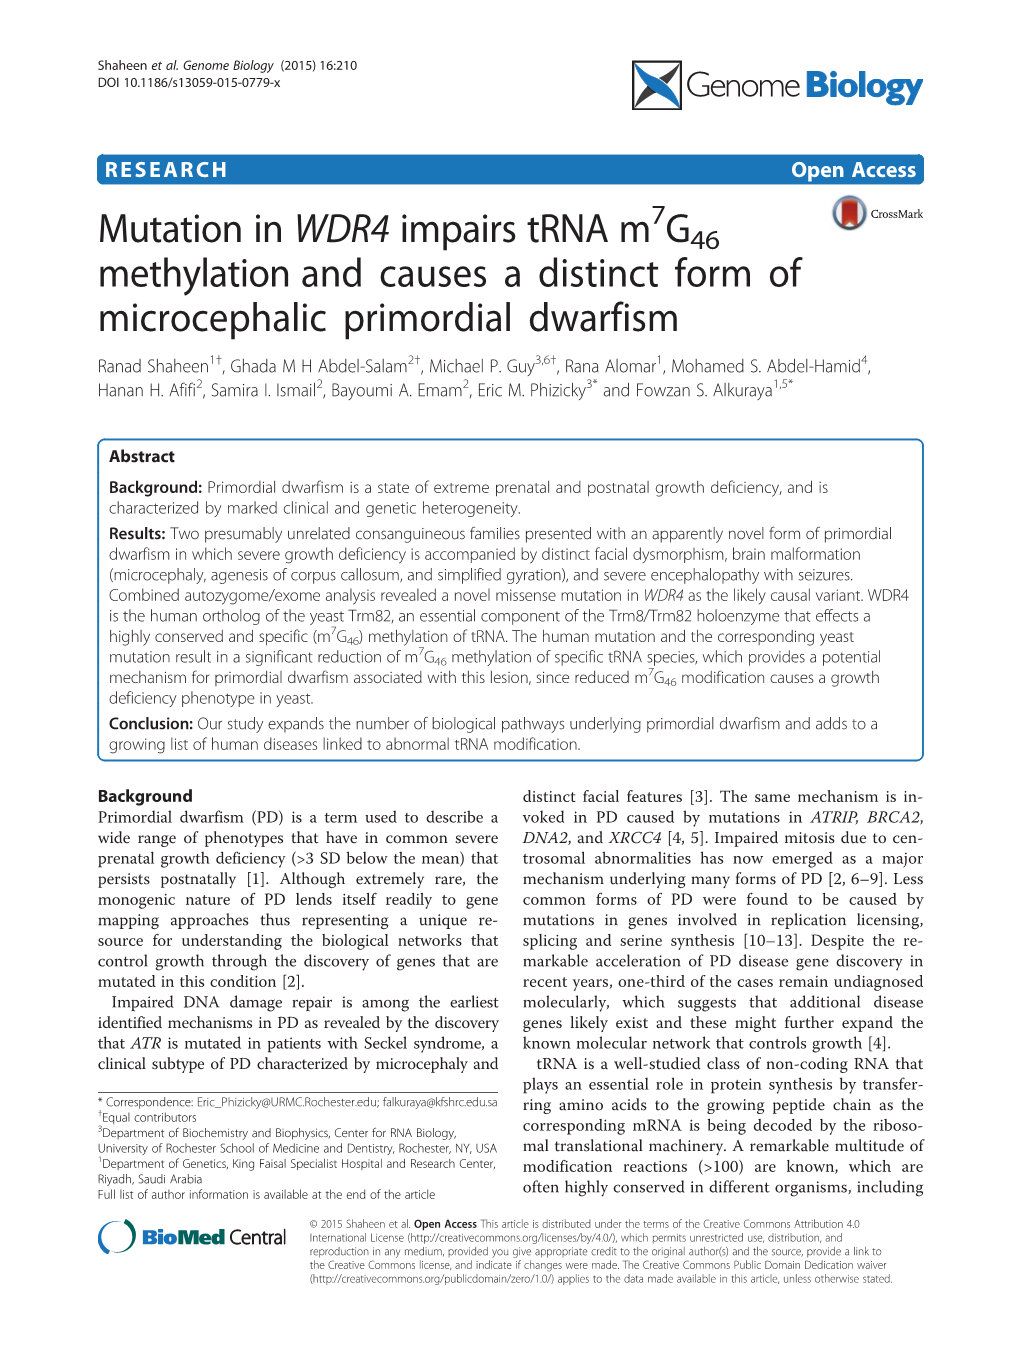 Mutation in WDR4 Impairs Trna M G46 Methylation and Causes a Distinct Form of Microcephalic Primordial Dwarfism Ranad Shaheen1†, Ghada M H Abdel-Salam2†, Michael P